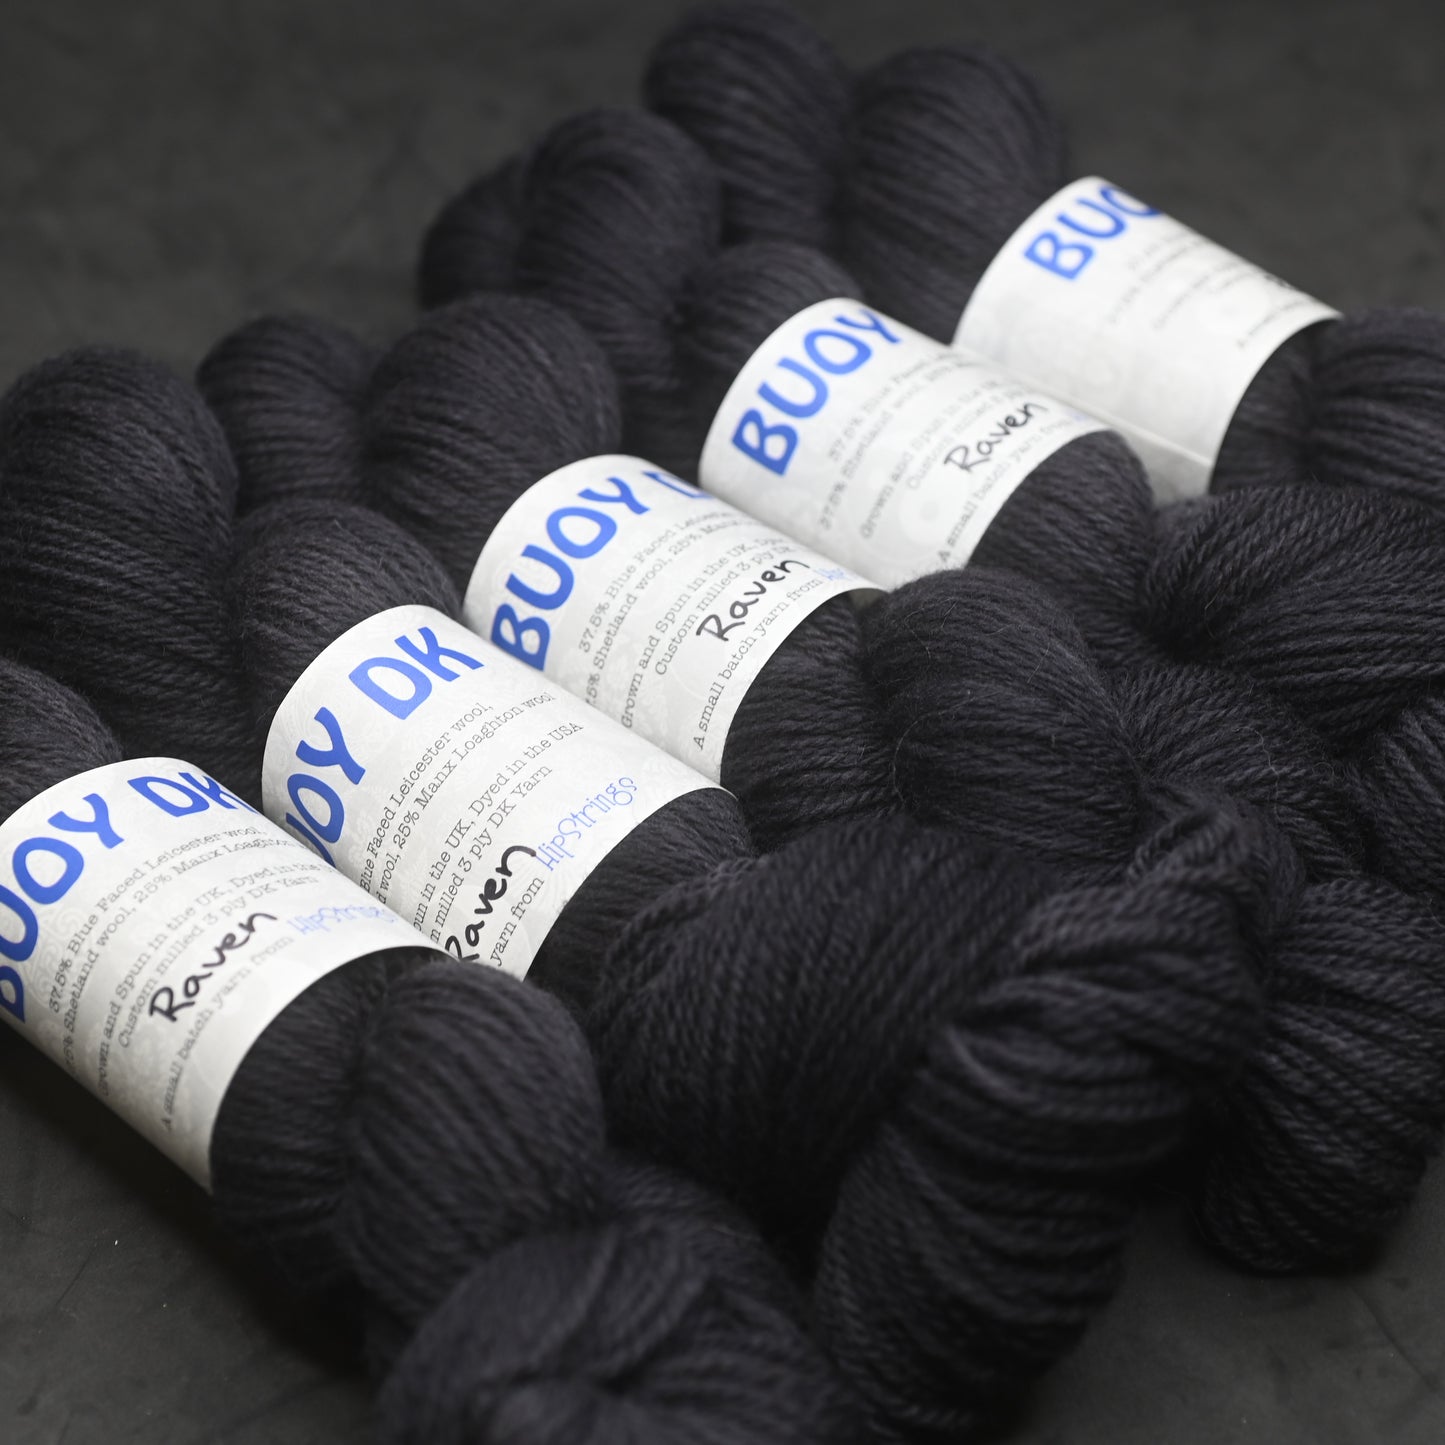 Raven on Hand Dyed Buoy DK (BFL/Shetland/Manx wool) - 100g